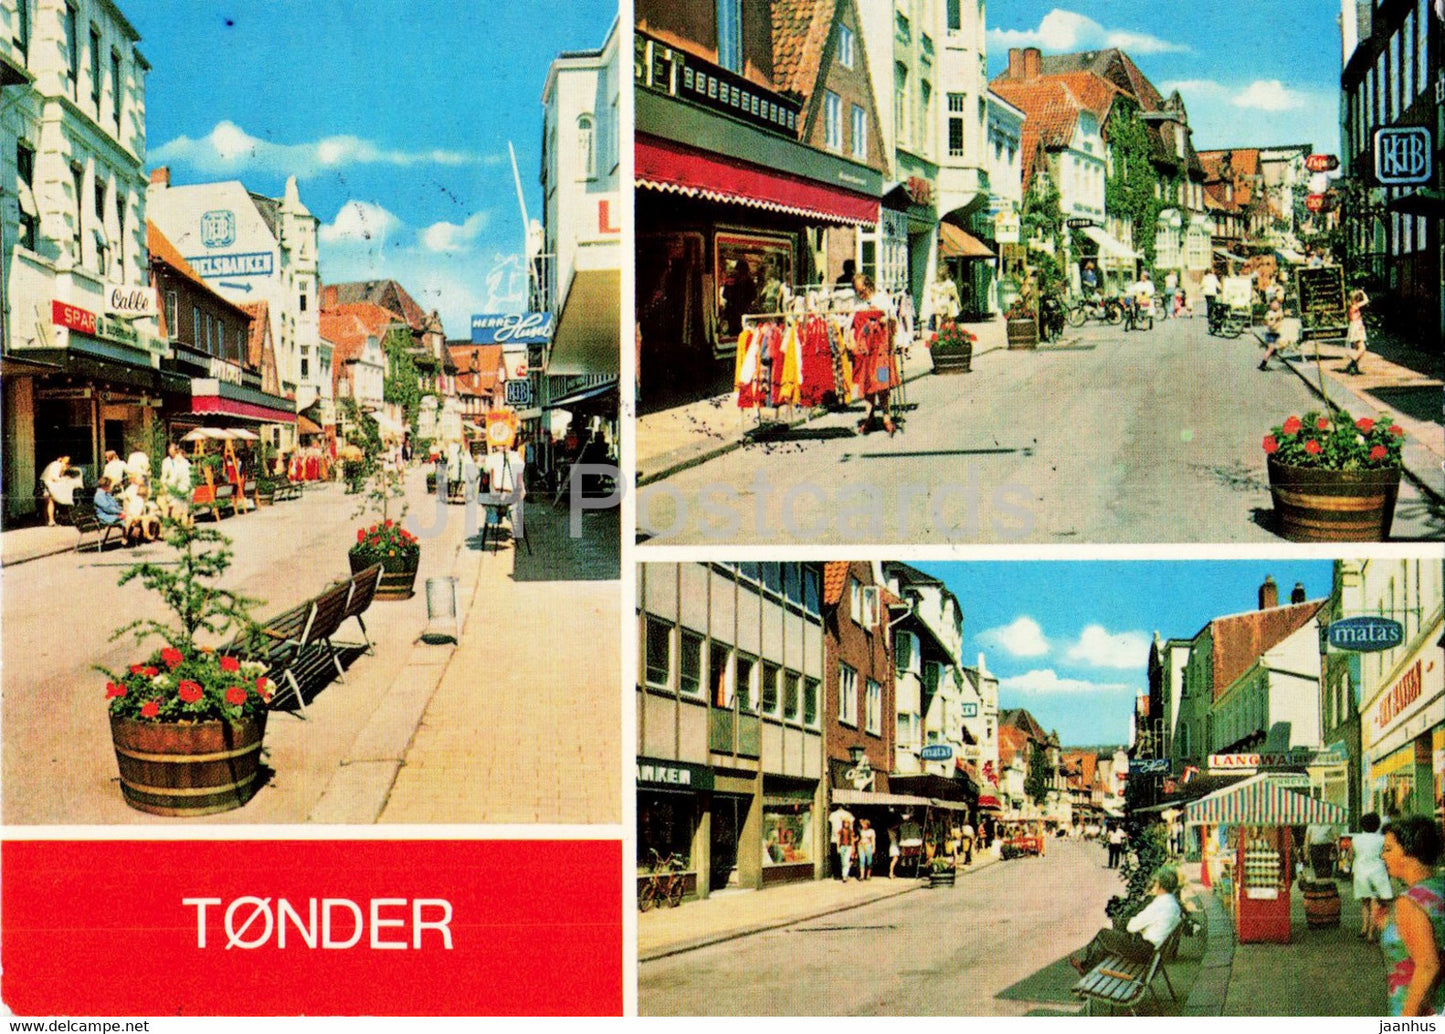 Gagaden i Tonder - The streets in Tonder - 1976 - Denmark - used - JH Postcards